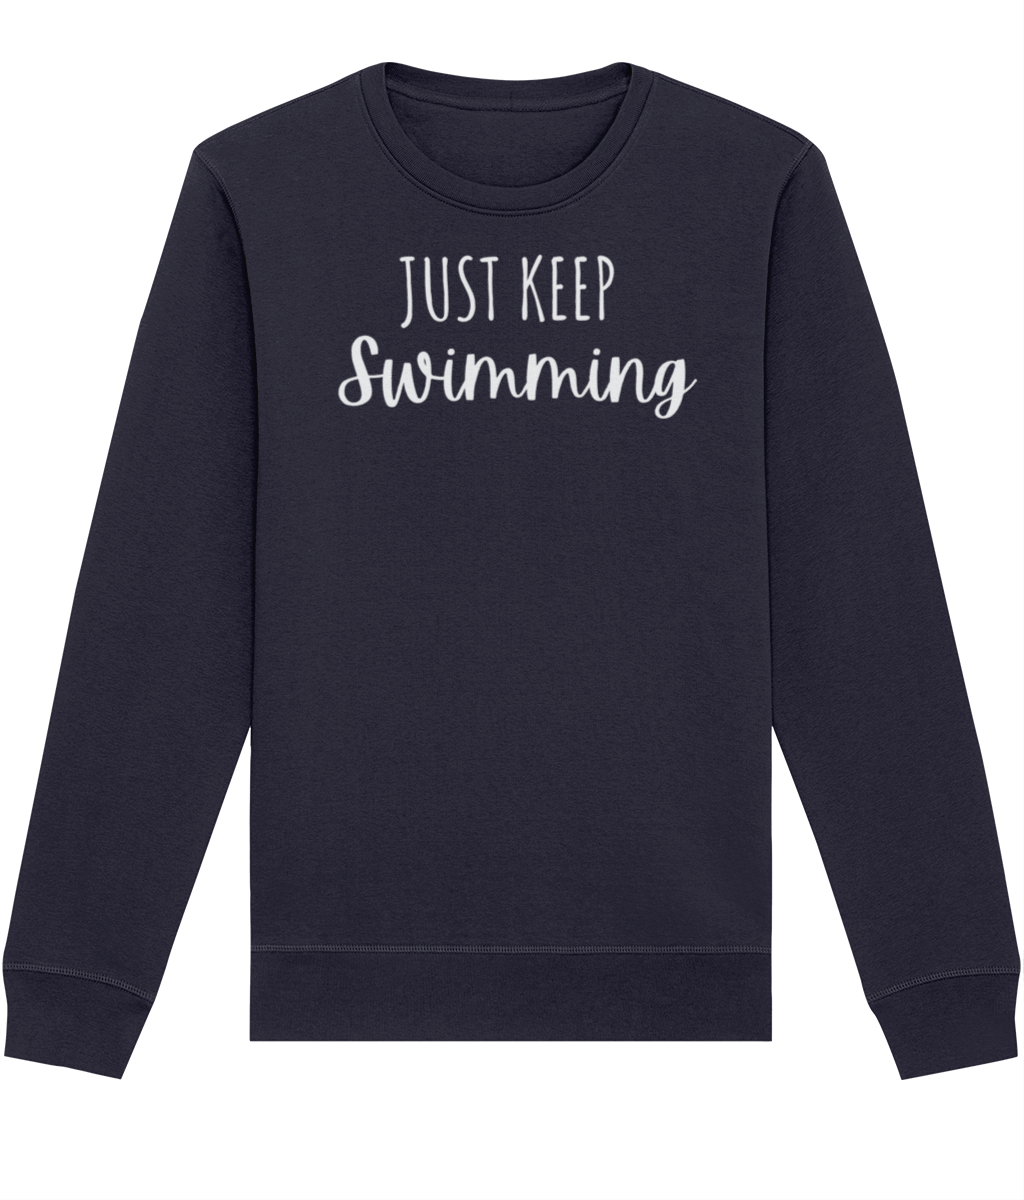 Just Keep Swimming Organic Cotton Sweatshirt | Arvor Life